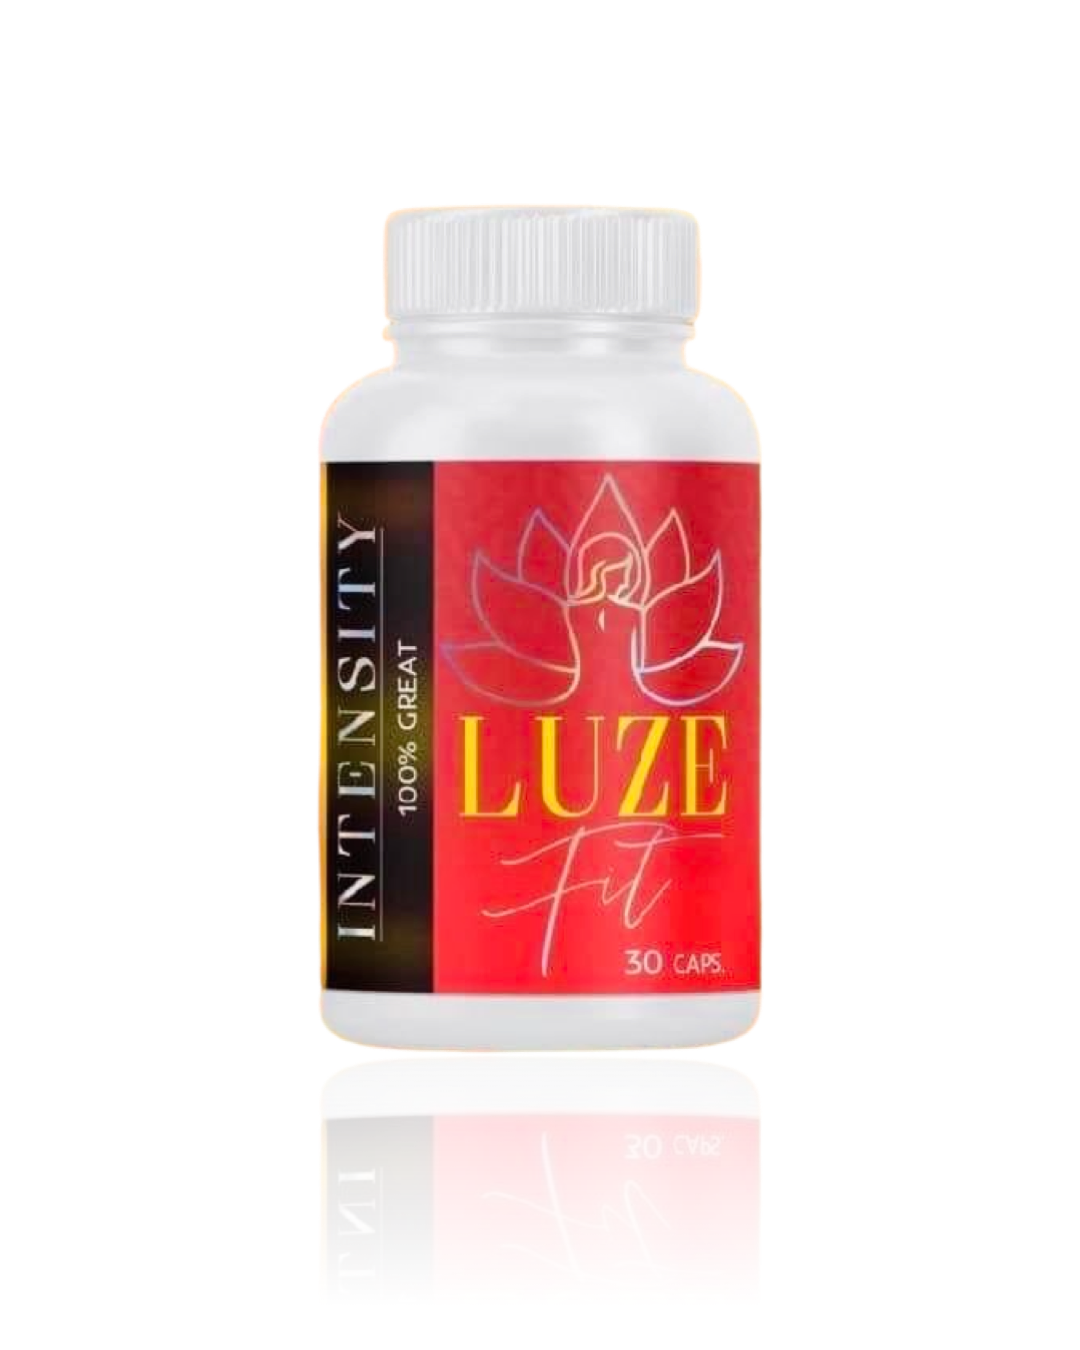 Luze fit intensity y Fit Detox Kit